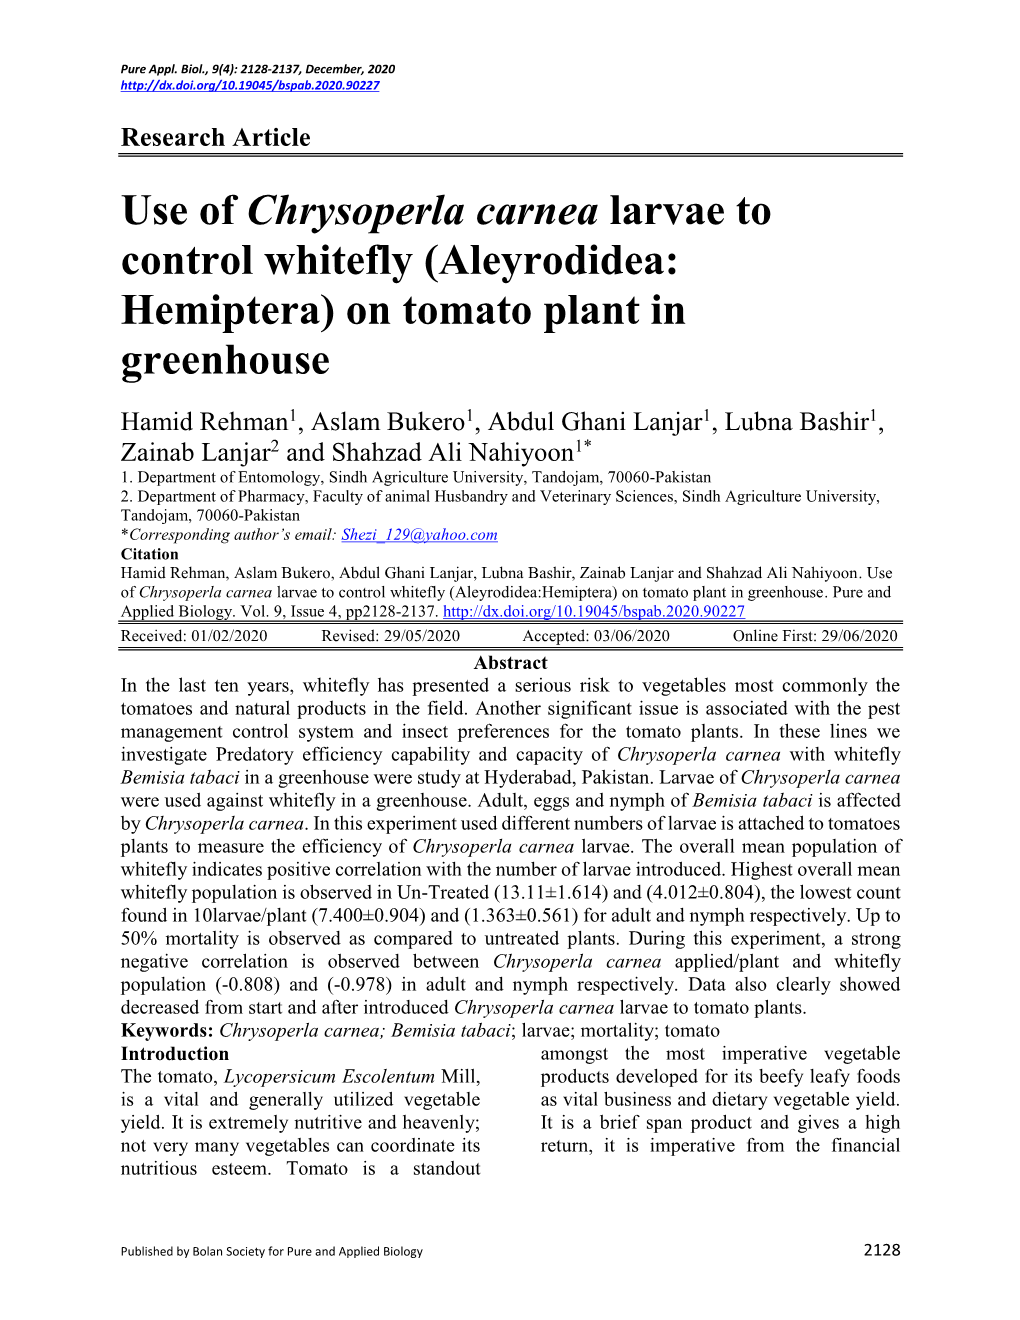 Use of Chrysoperla Carnea Larvae to Control Whitefly (Aleyrodidea: Hemiptera) on Tomato Plant in Greenhouse